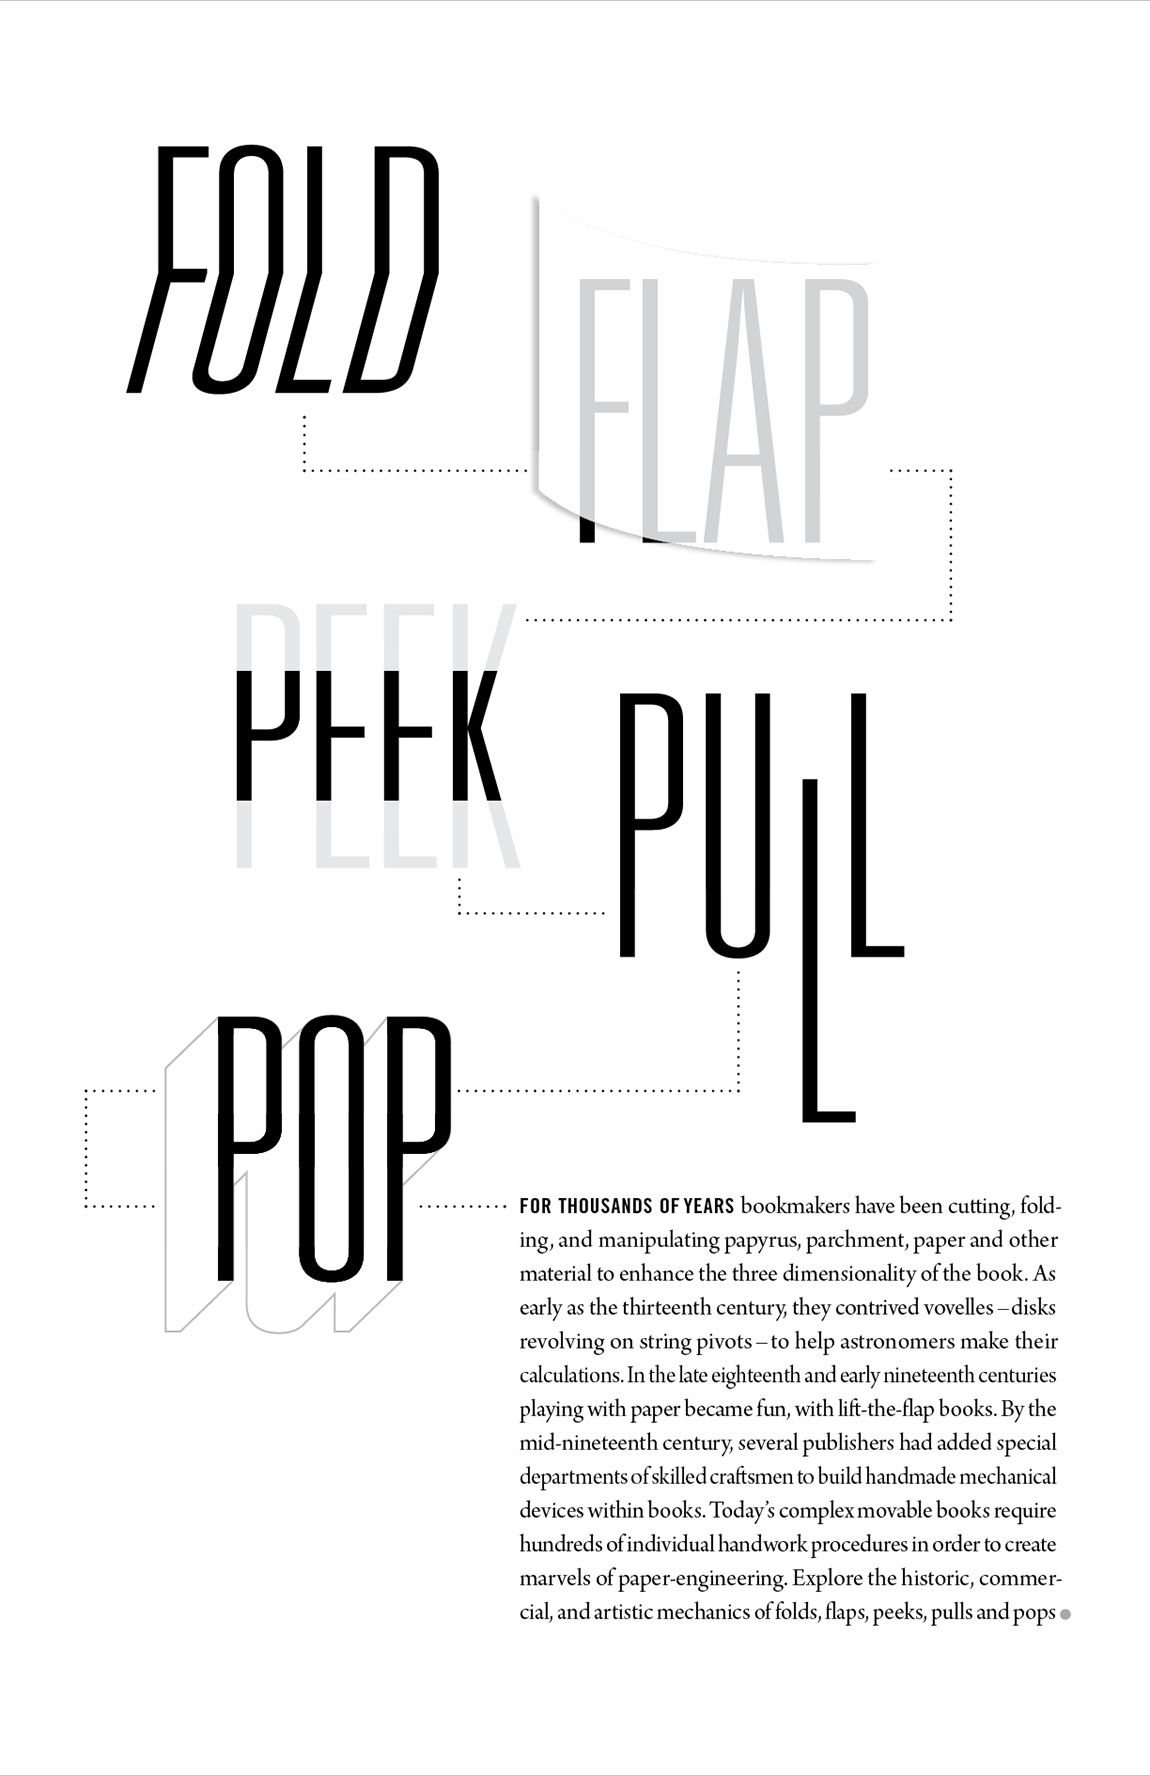 Fold, Flap, Peep, Pull, Pop Poster, David Wolske, 2012